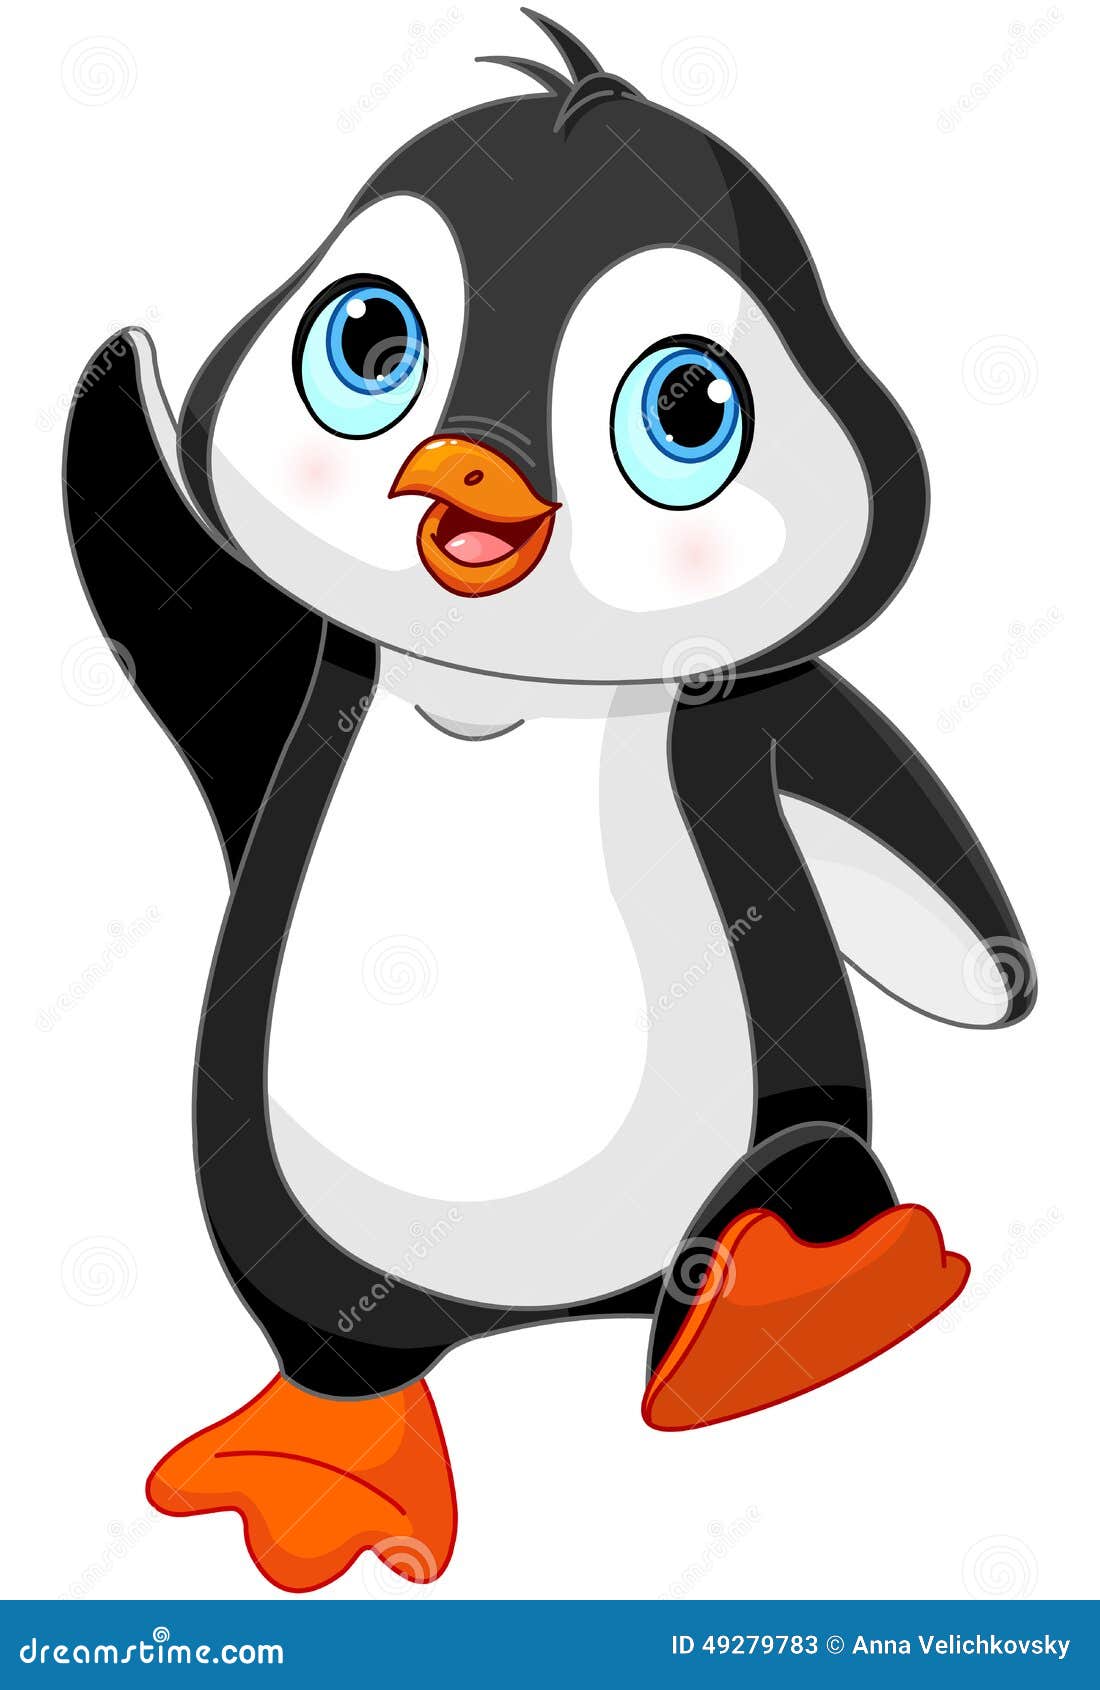 Penguin Cartoon Image & Photo (Free Trial)